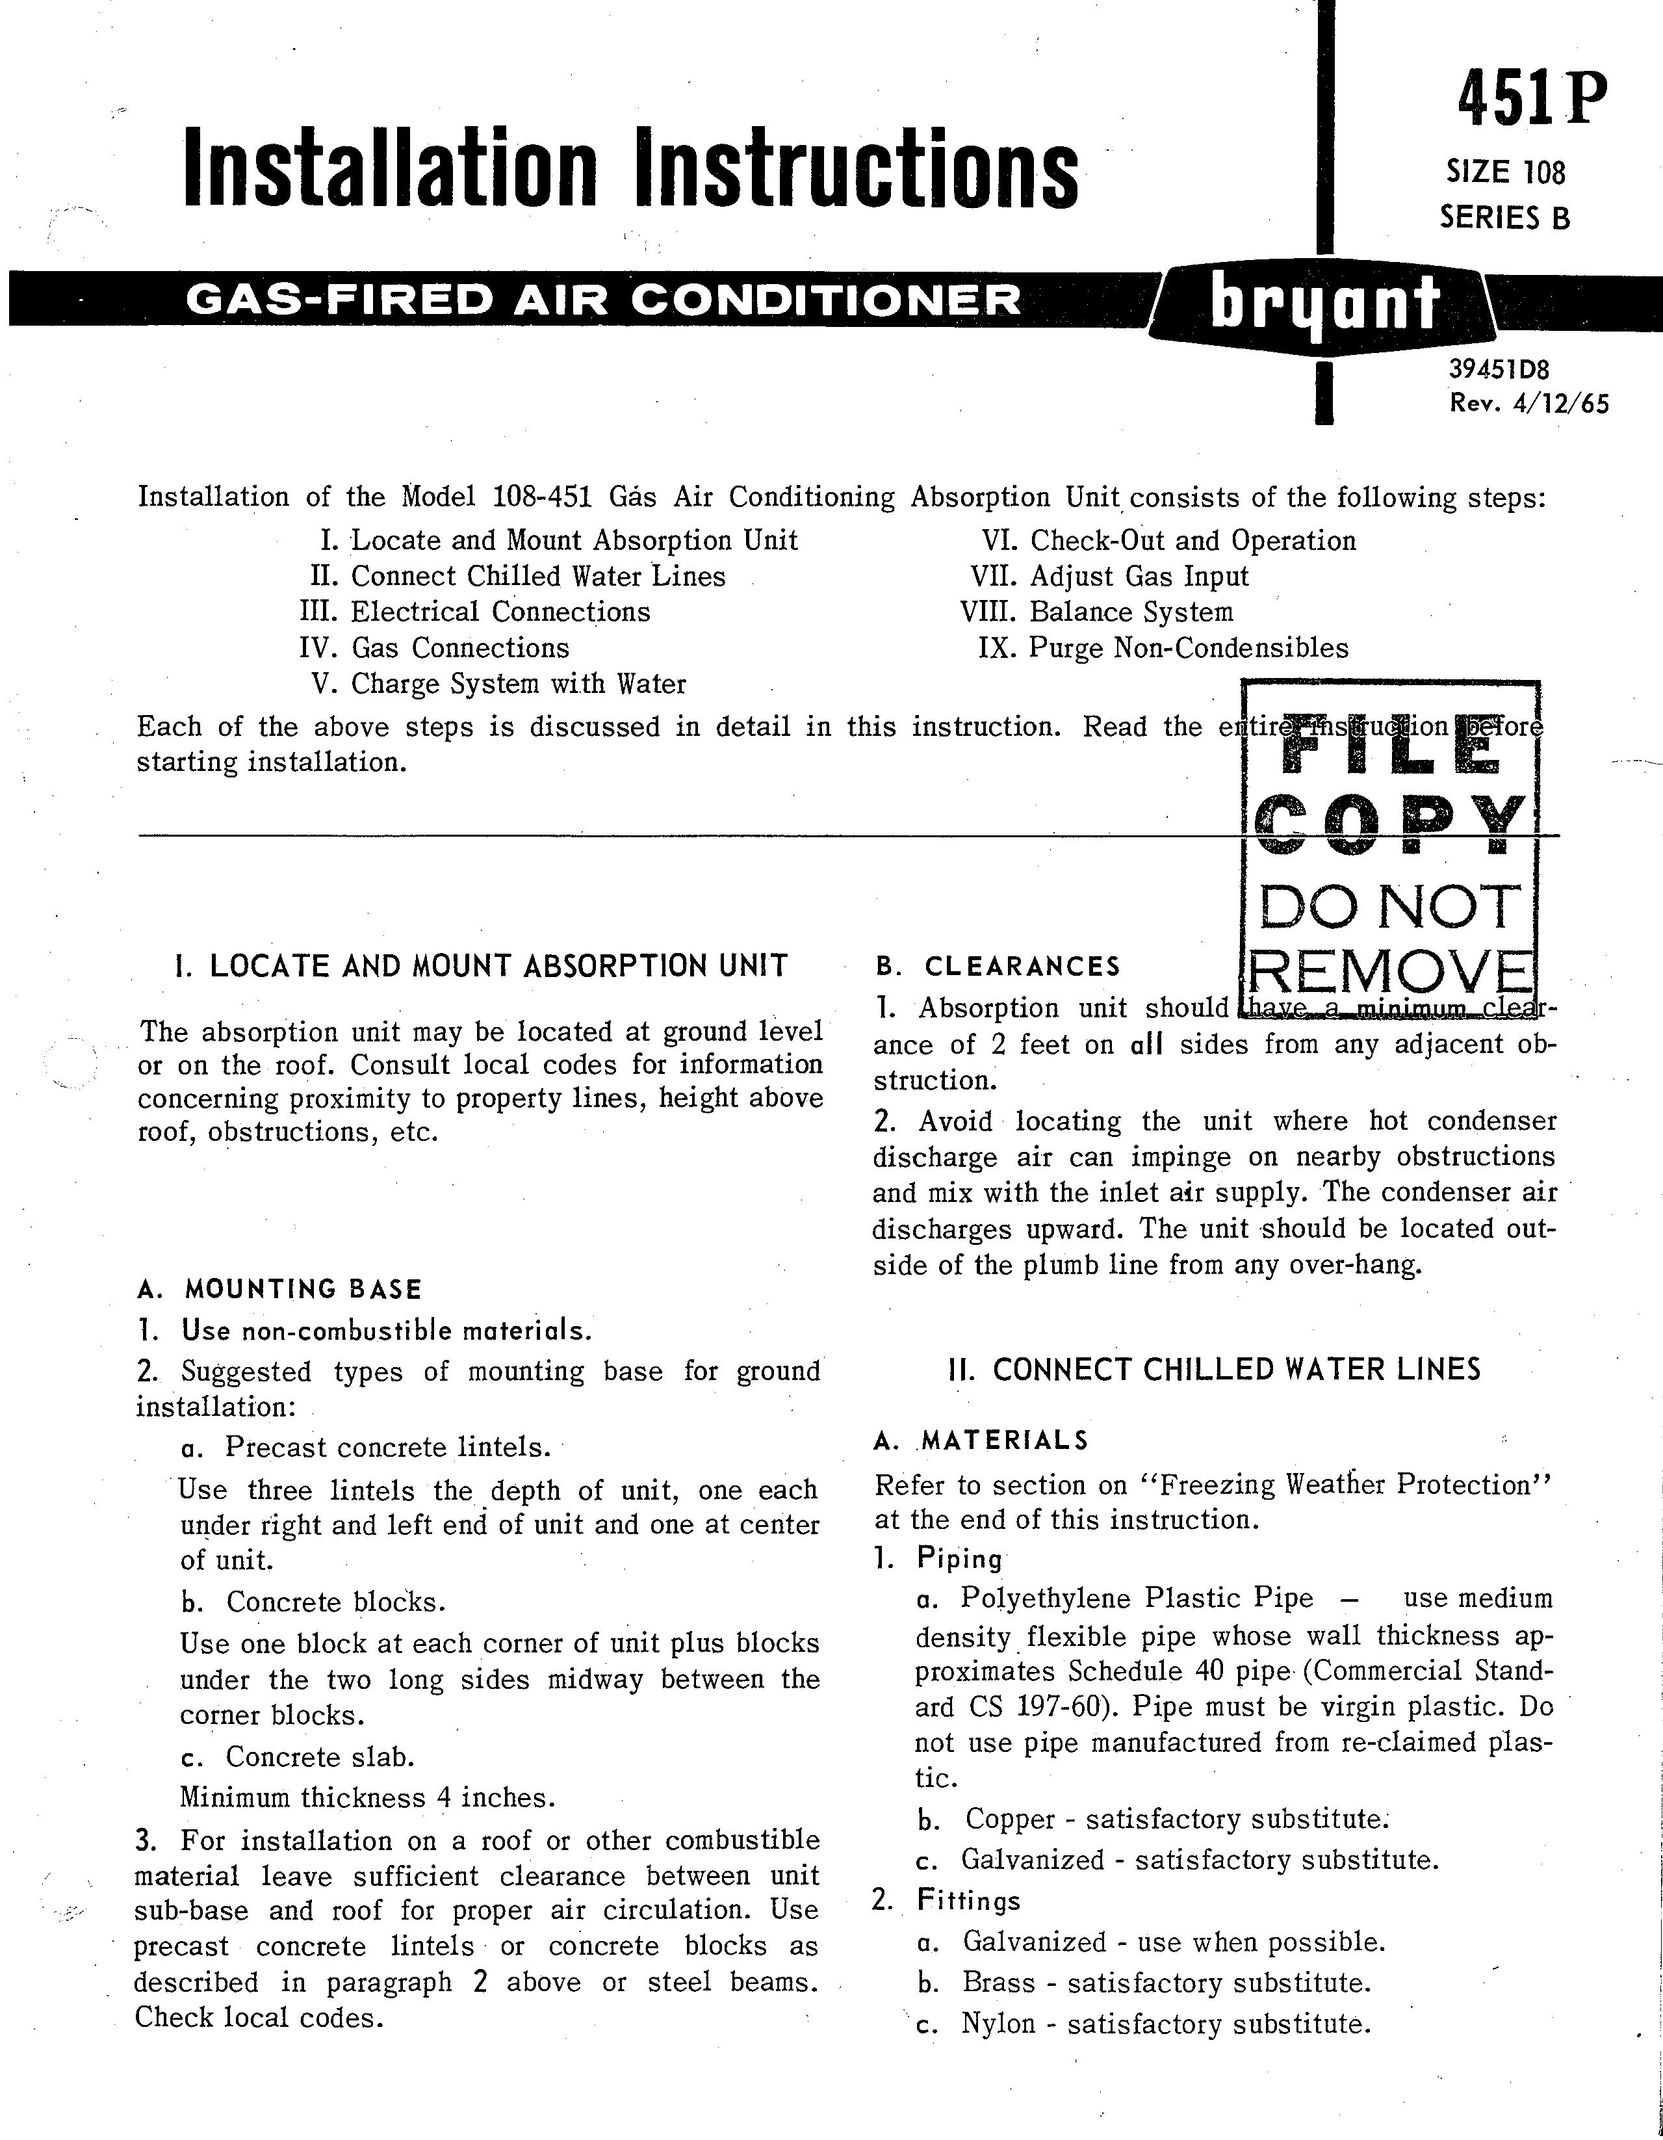 Bryant 451P Air Conditioner User Manual